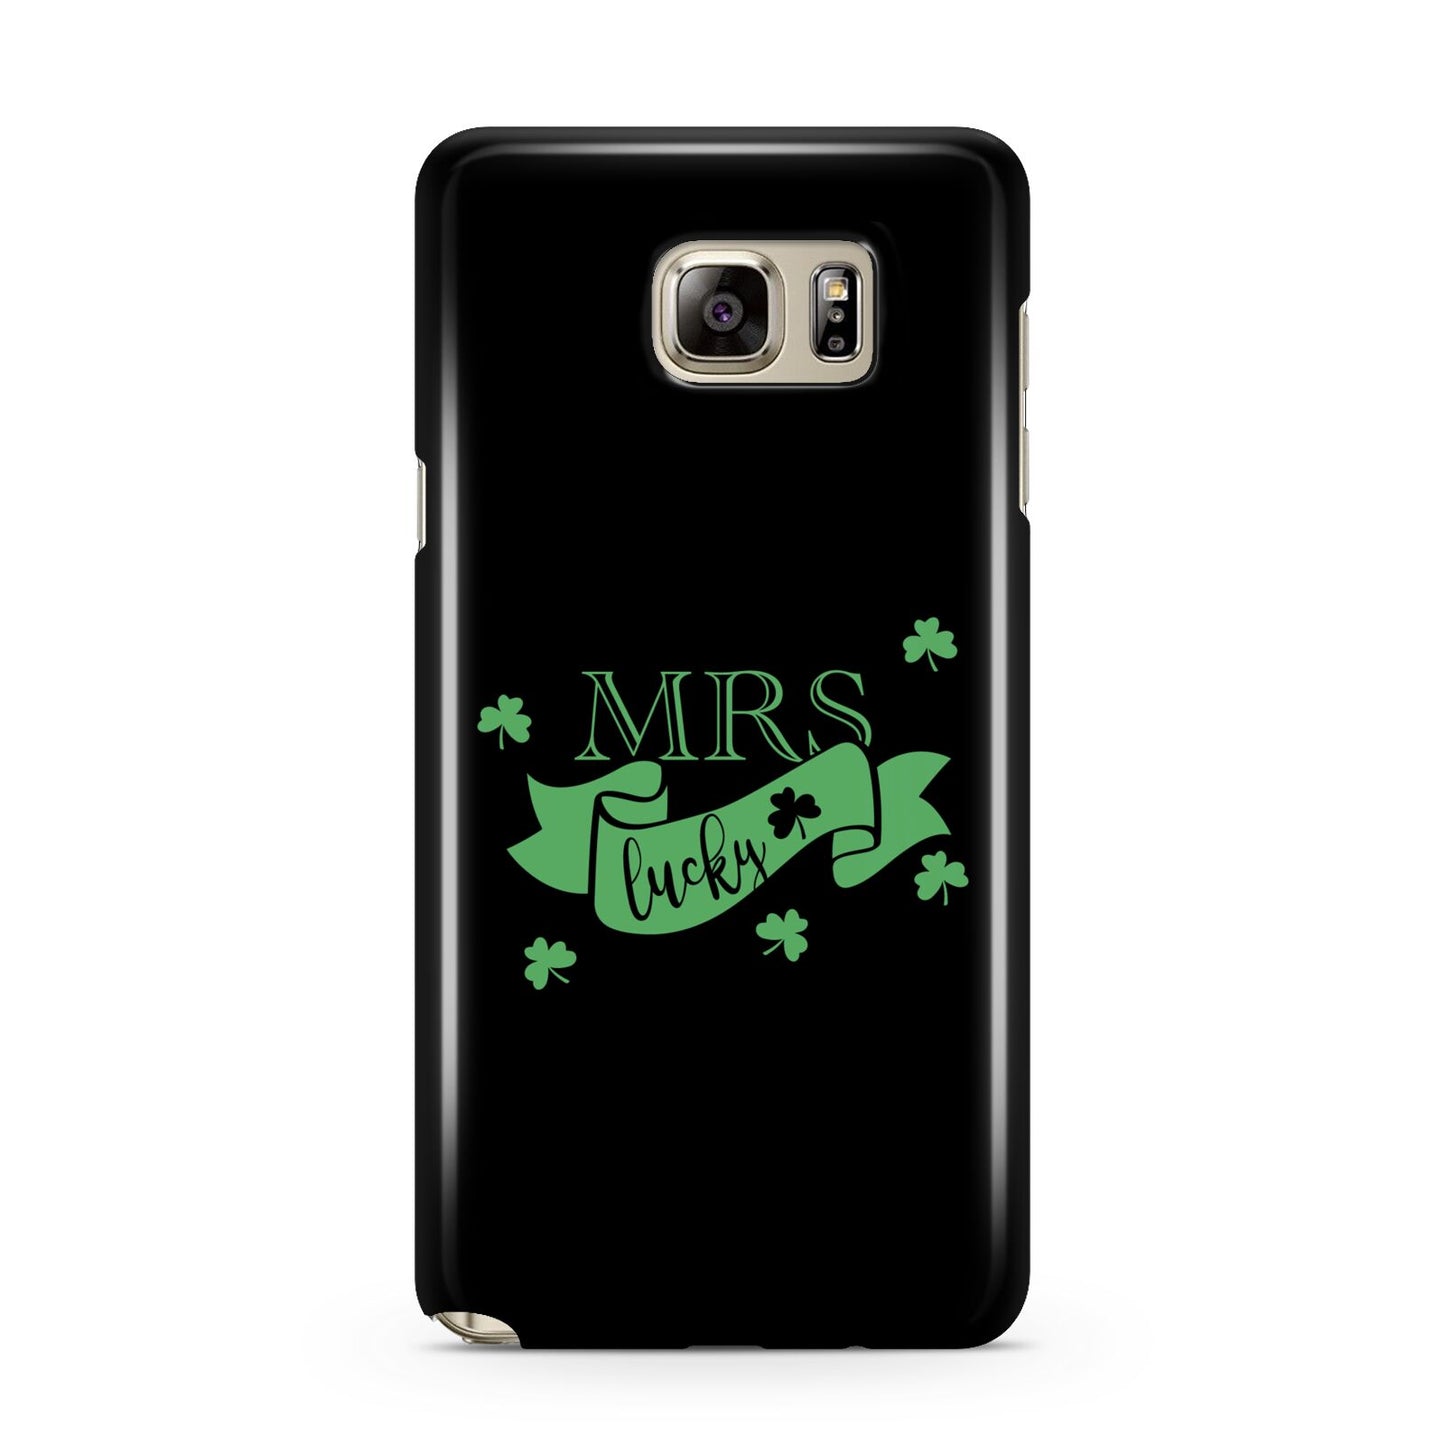 Mrs Lucky Samsung Galaxy Note 5 Case